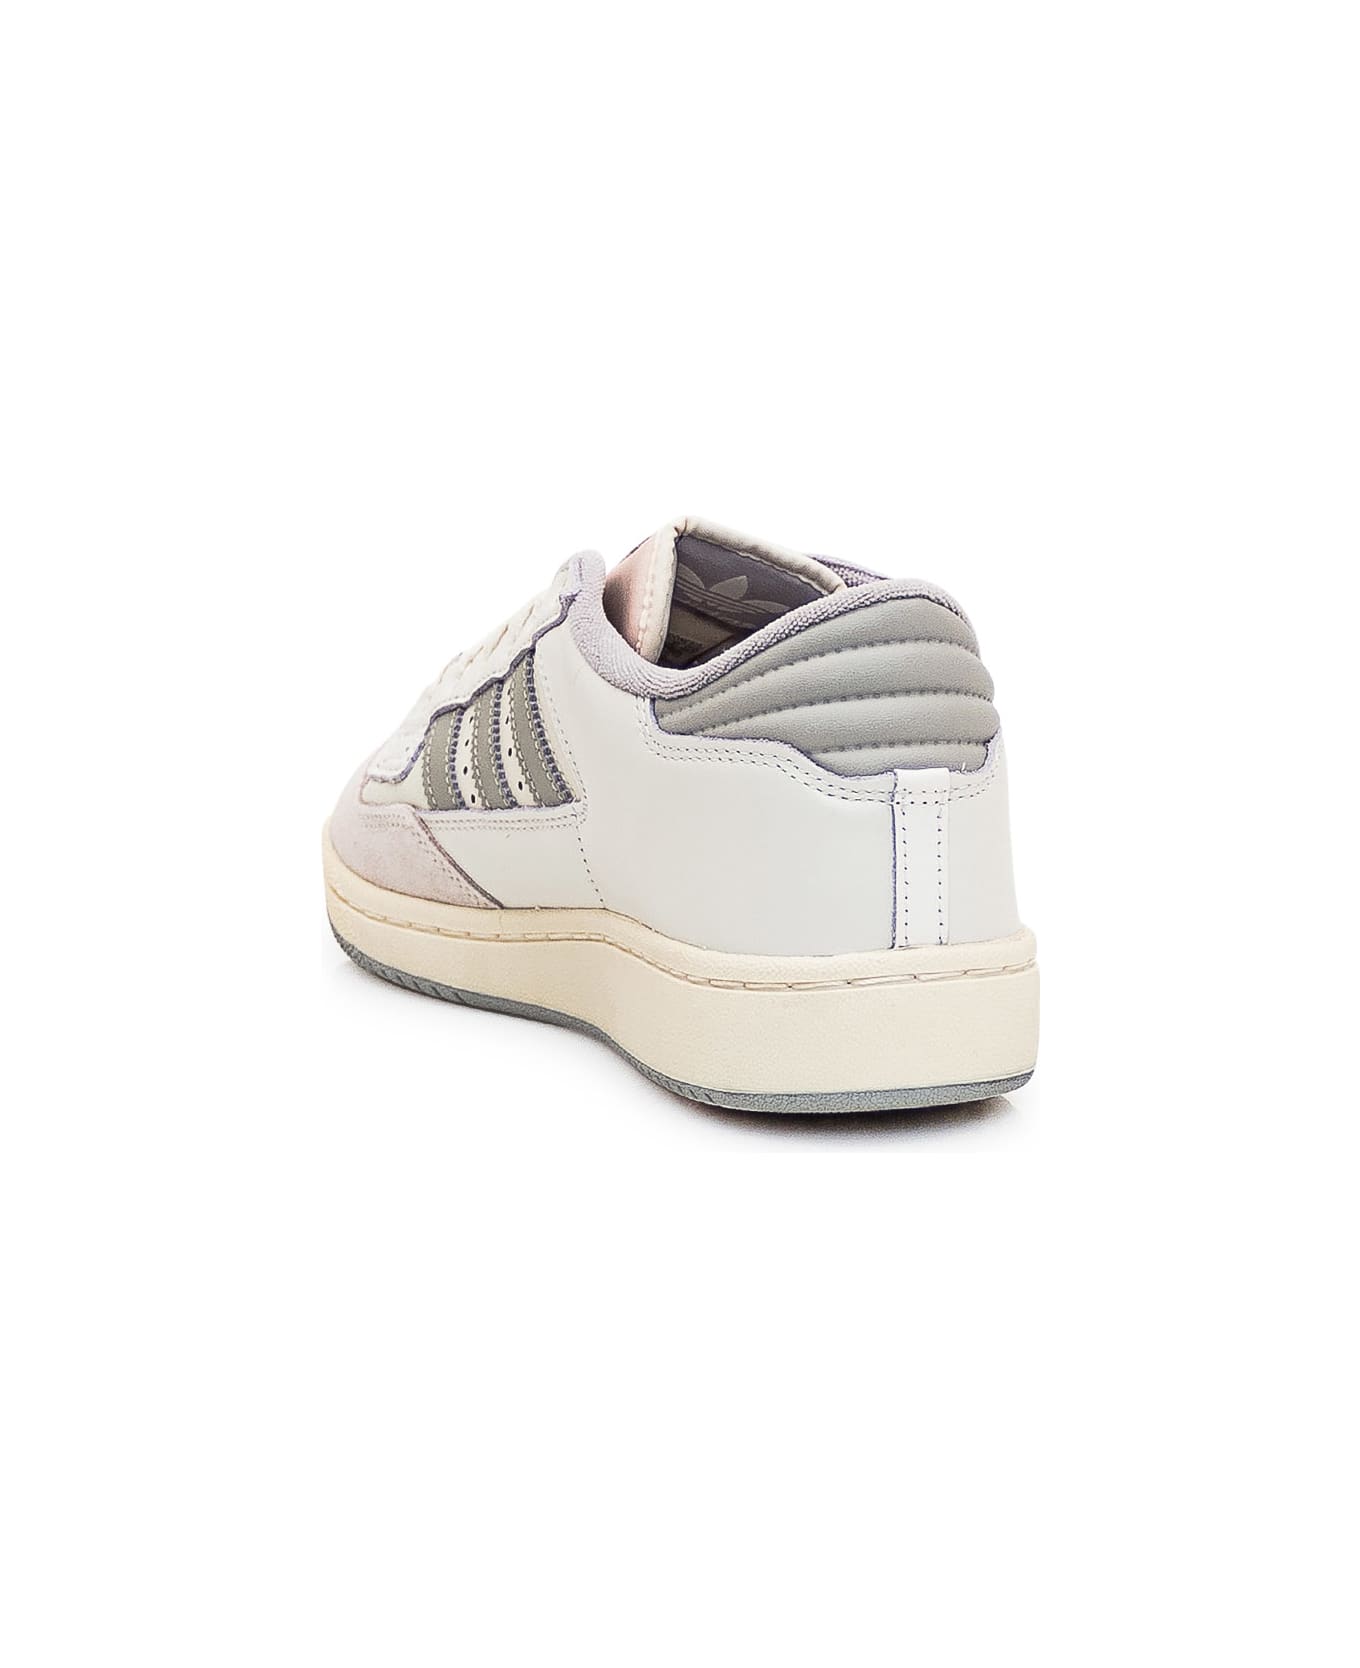 Adidas Originals Centennial 85 Sneaker - CLOWHI/METGRY/CWHITE スニーカー